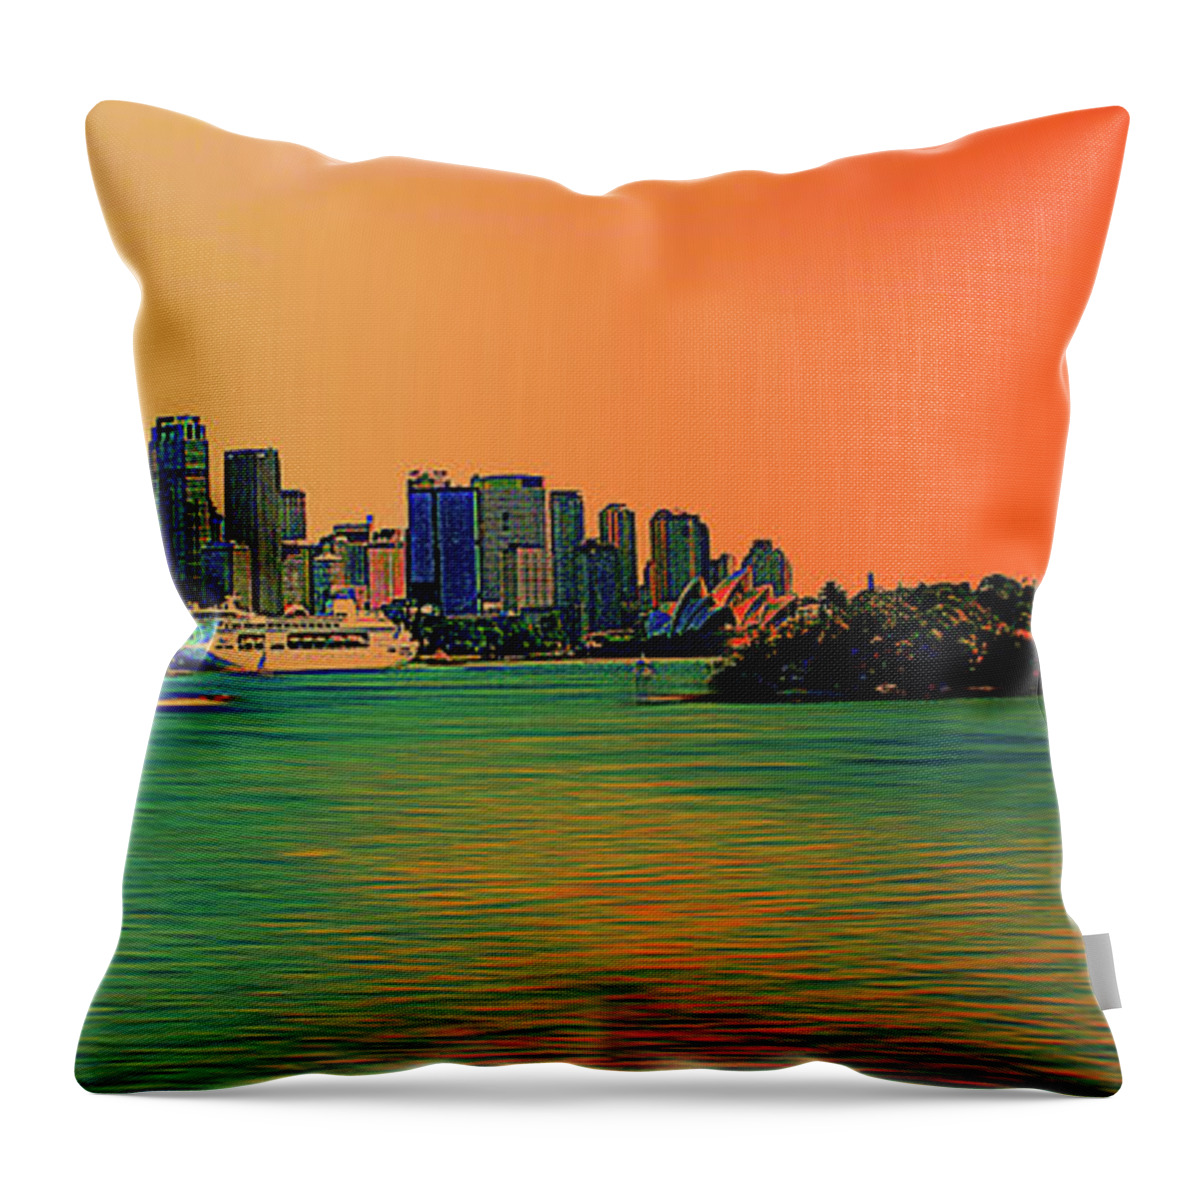 Sydney Throw Pillow featuring the photograph Sydney Harbour In Orange by Miroslava Jurcik